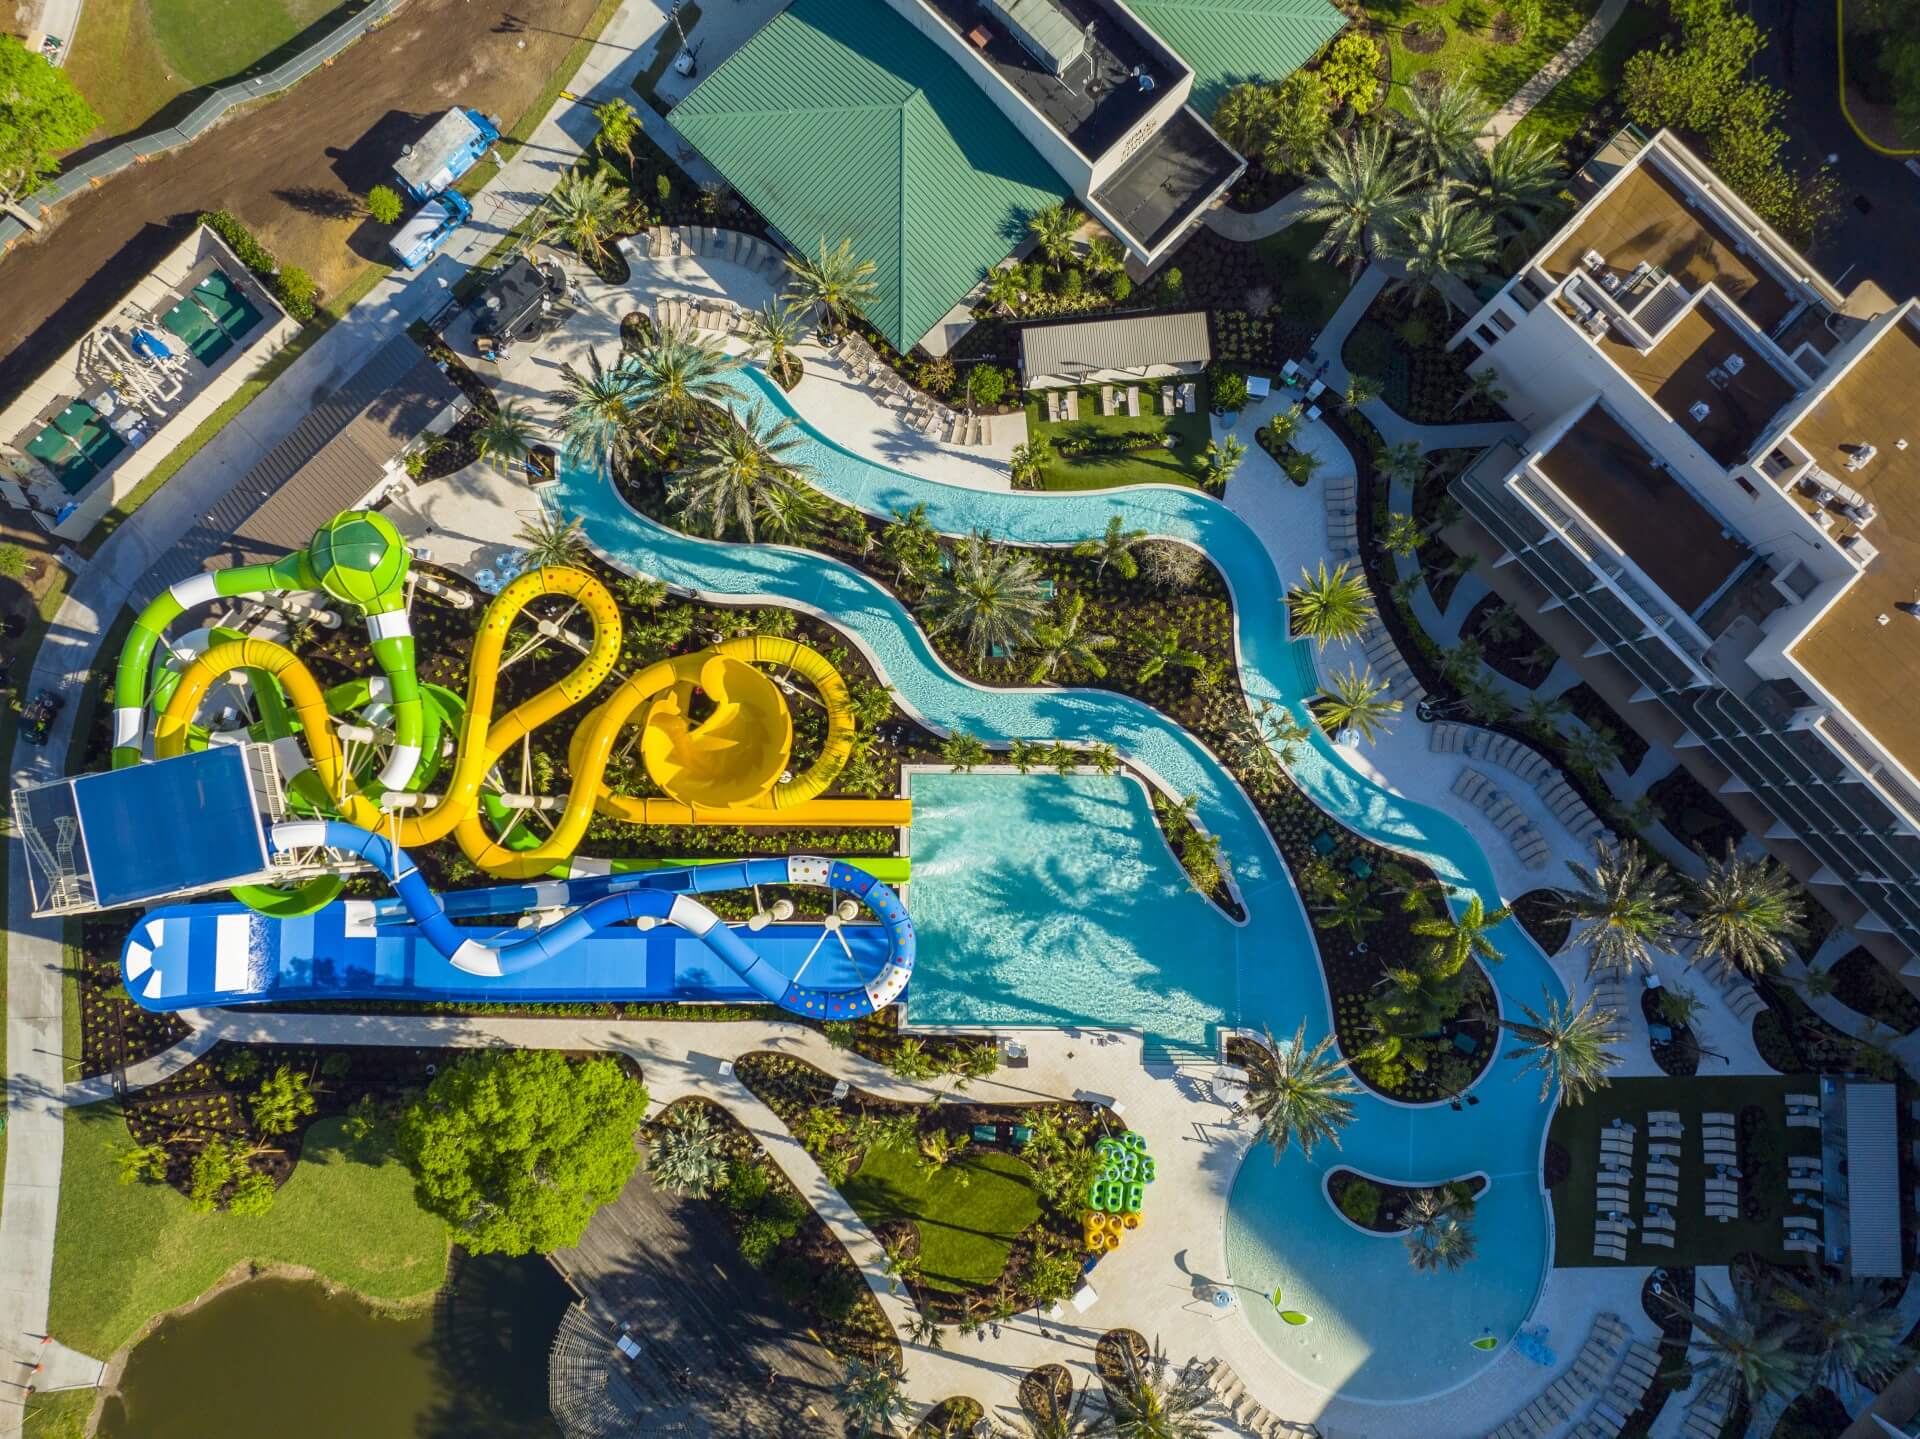 Orlando Hotel Opens “River Falls Waterpark” Designed by Martin Aquatic